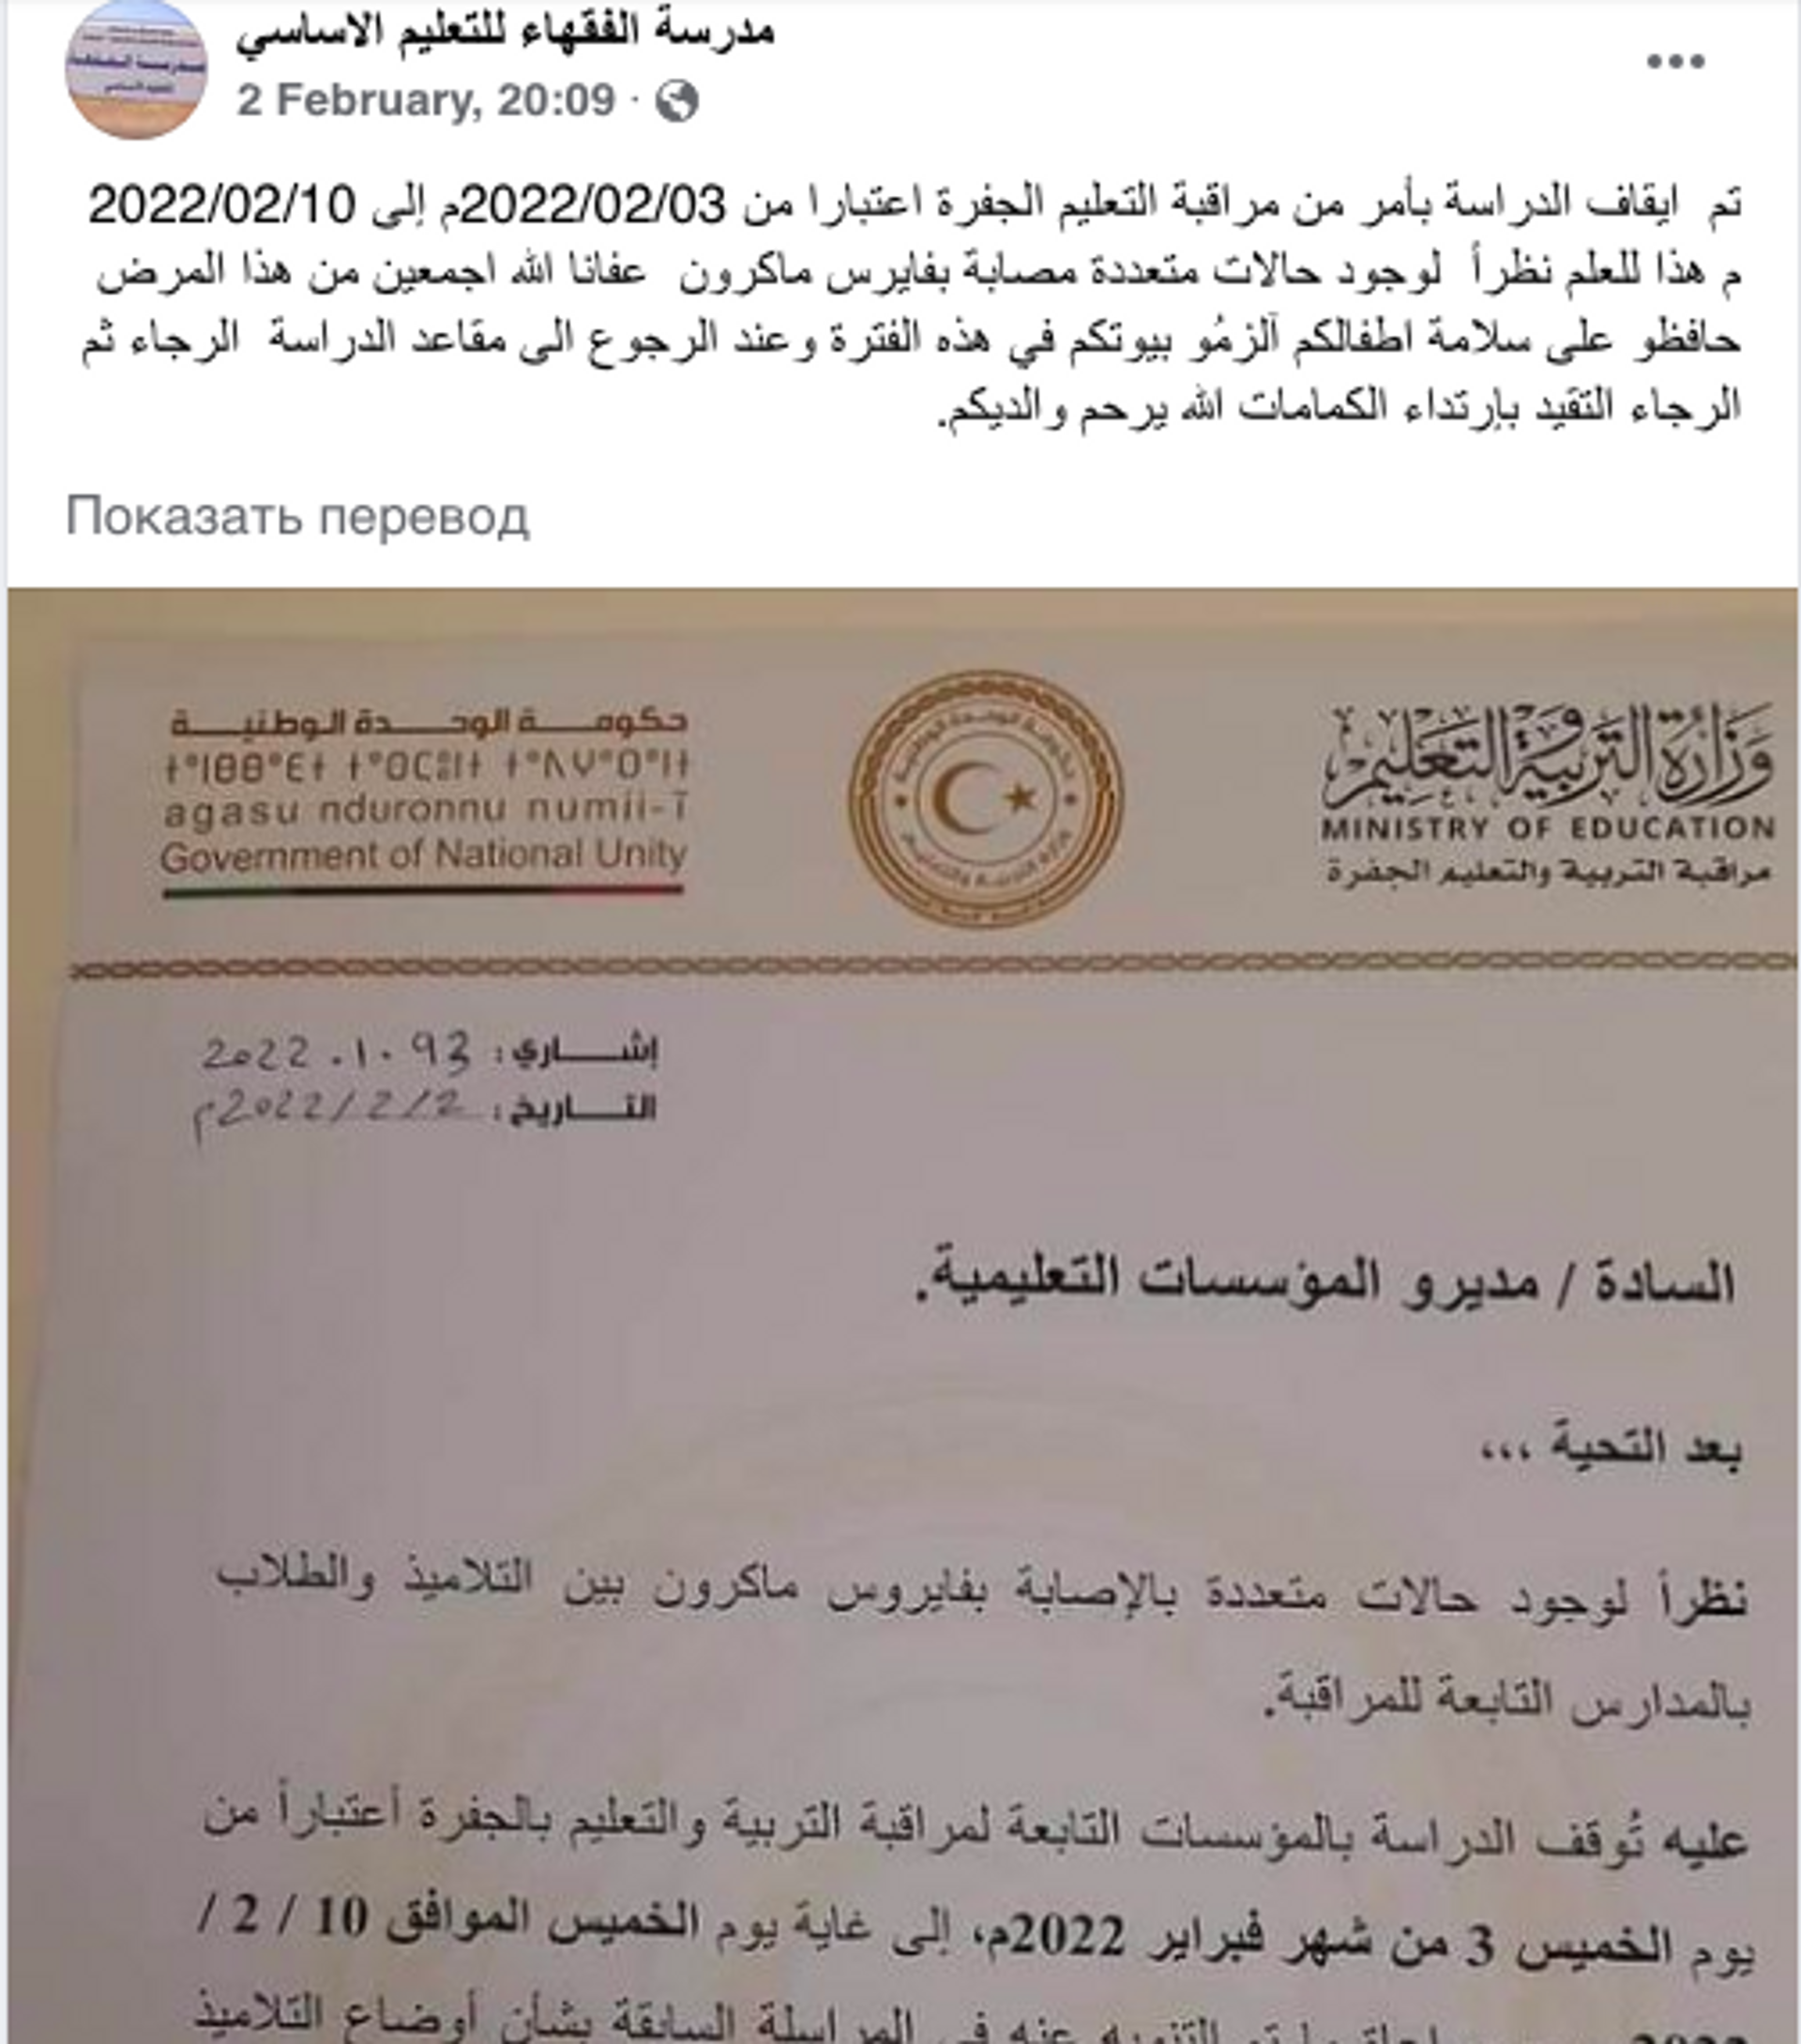 Libyan Education Ministry's decree on coronavirus quarantine in schools, February 2022 - Sputnik International, 1920, 04.02.2022